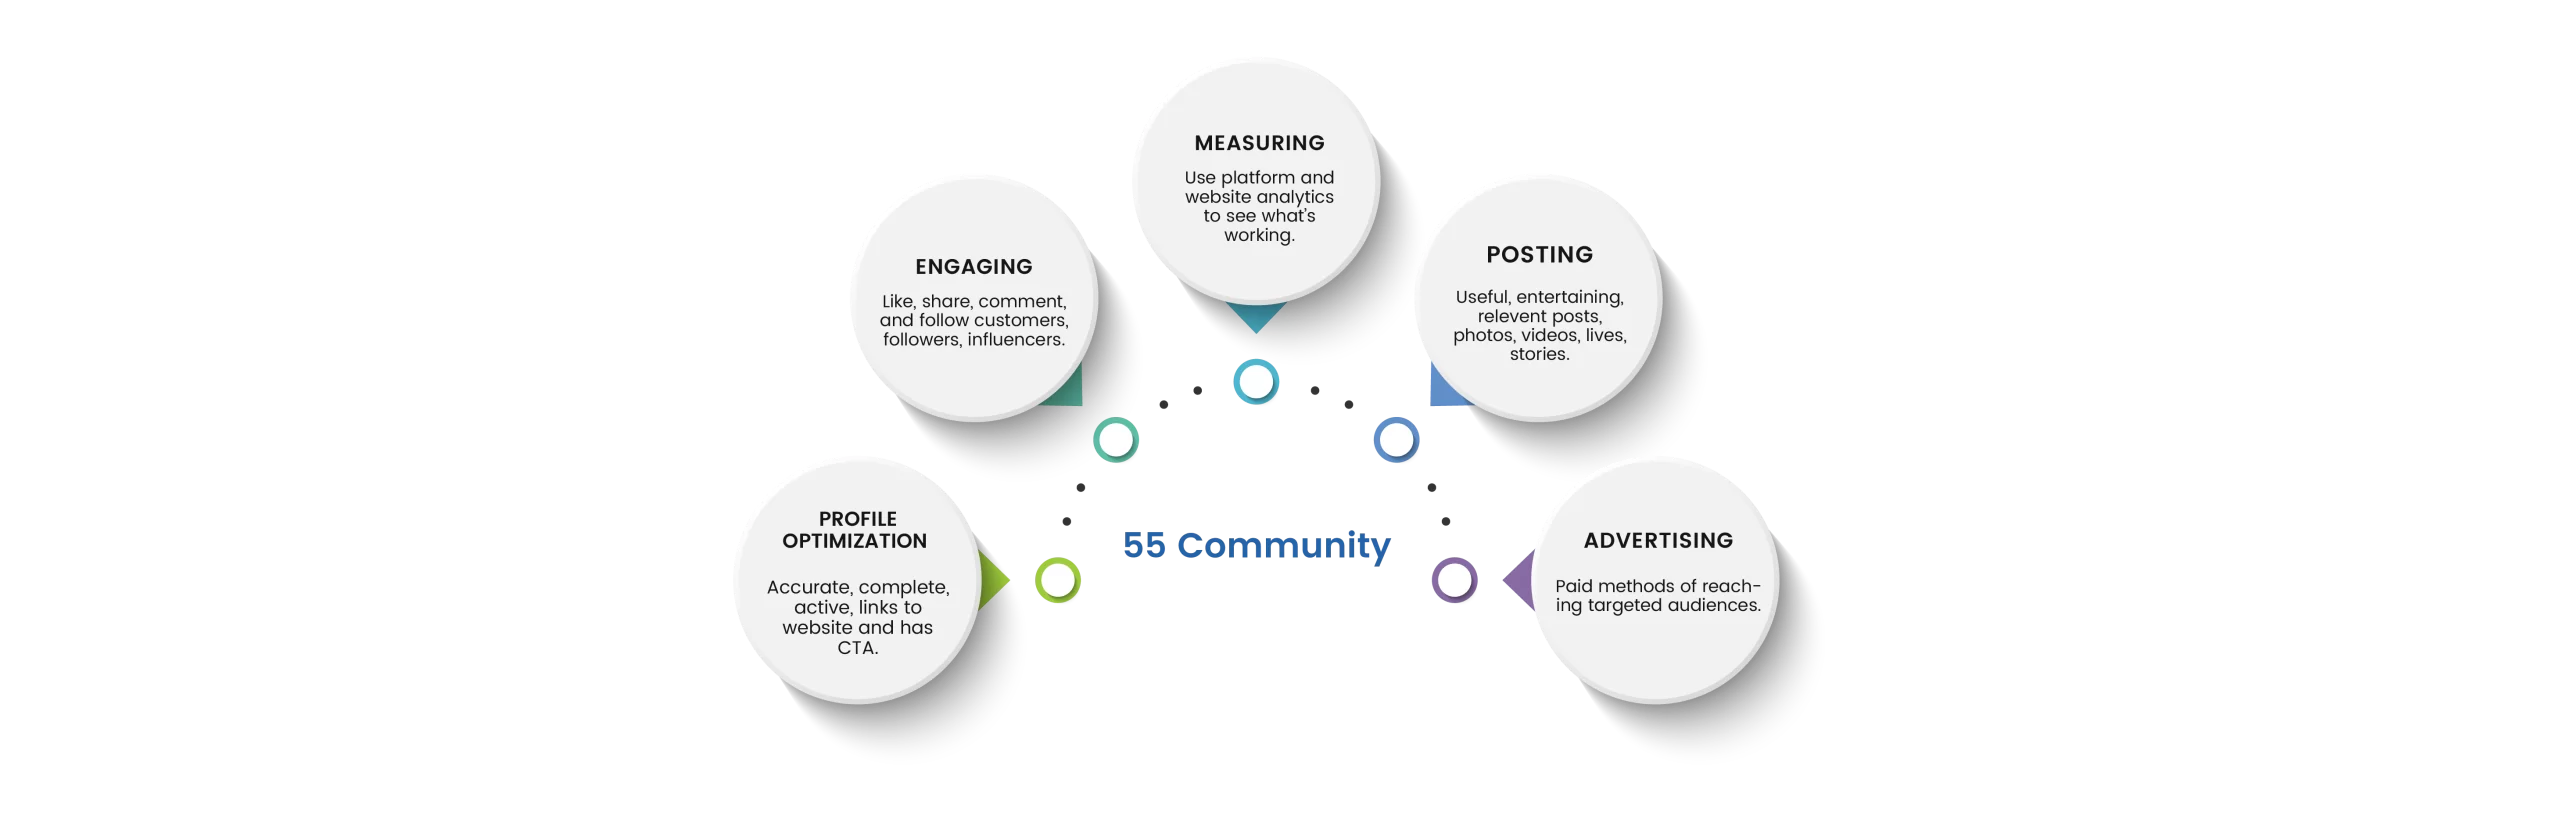 55 Community Marketing Strategy